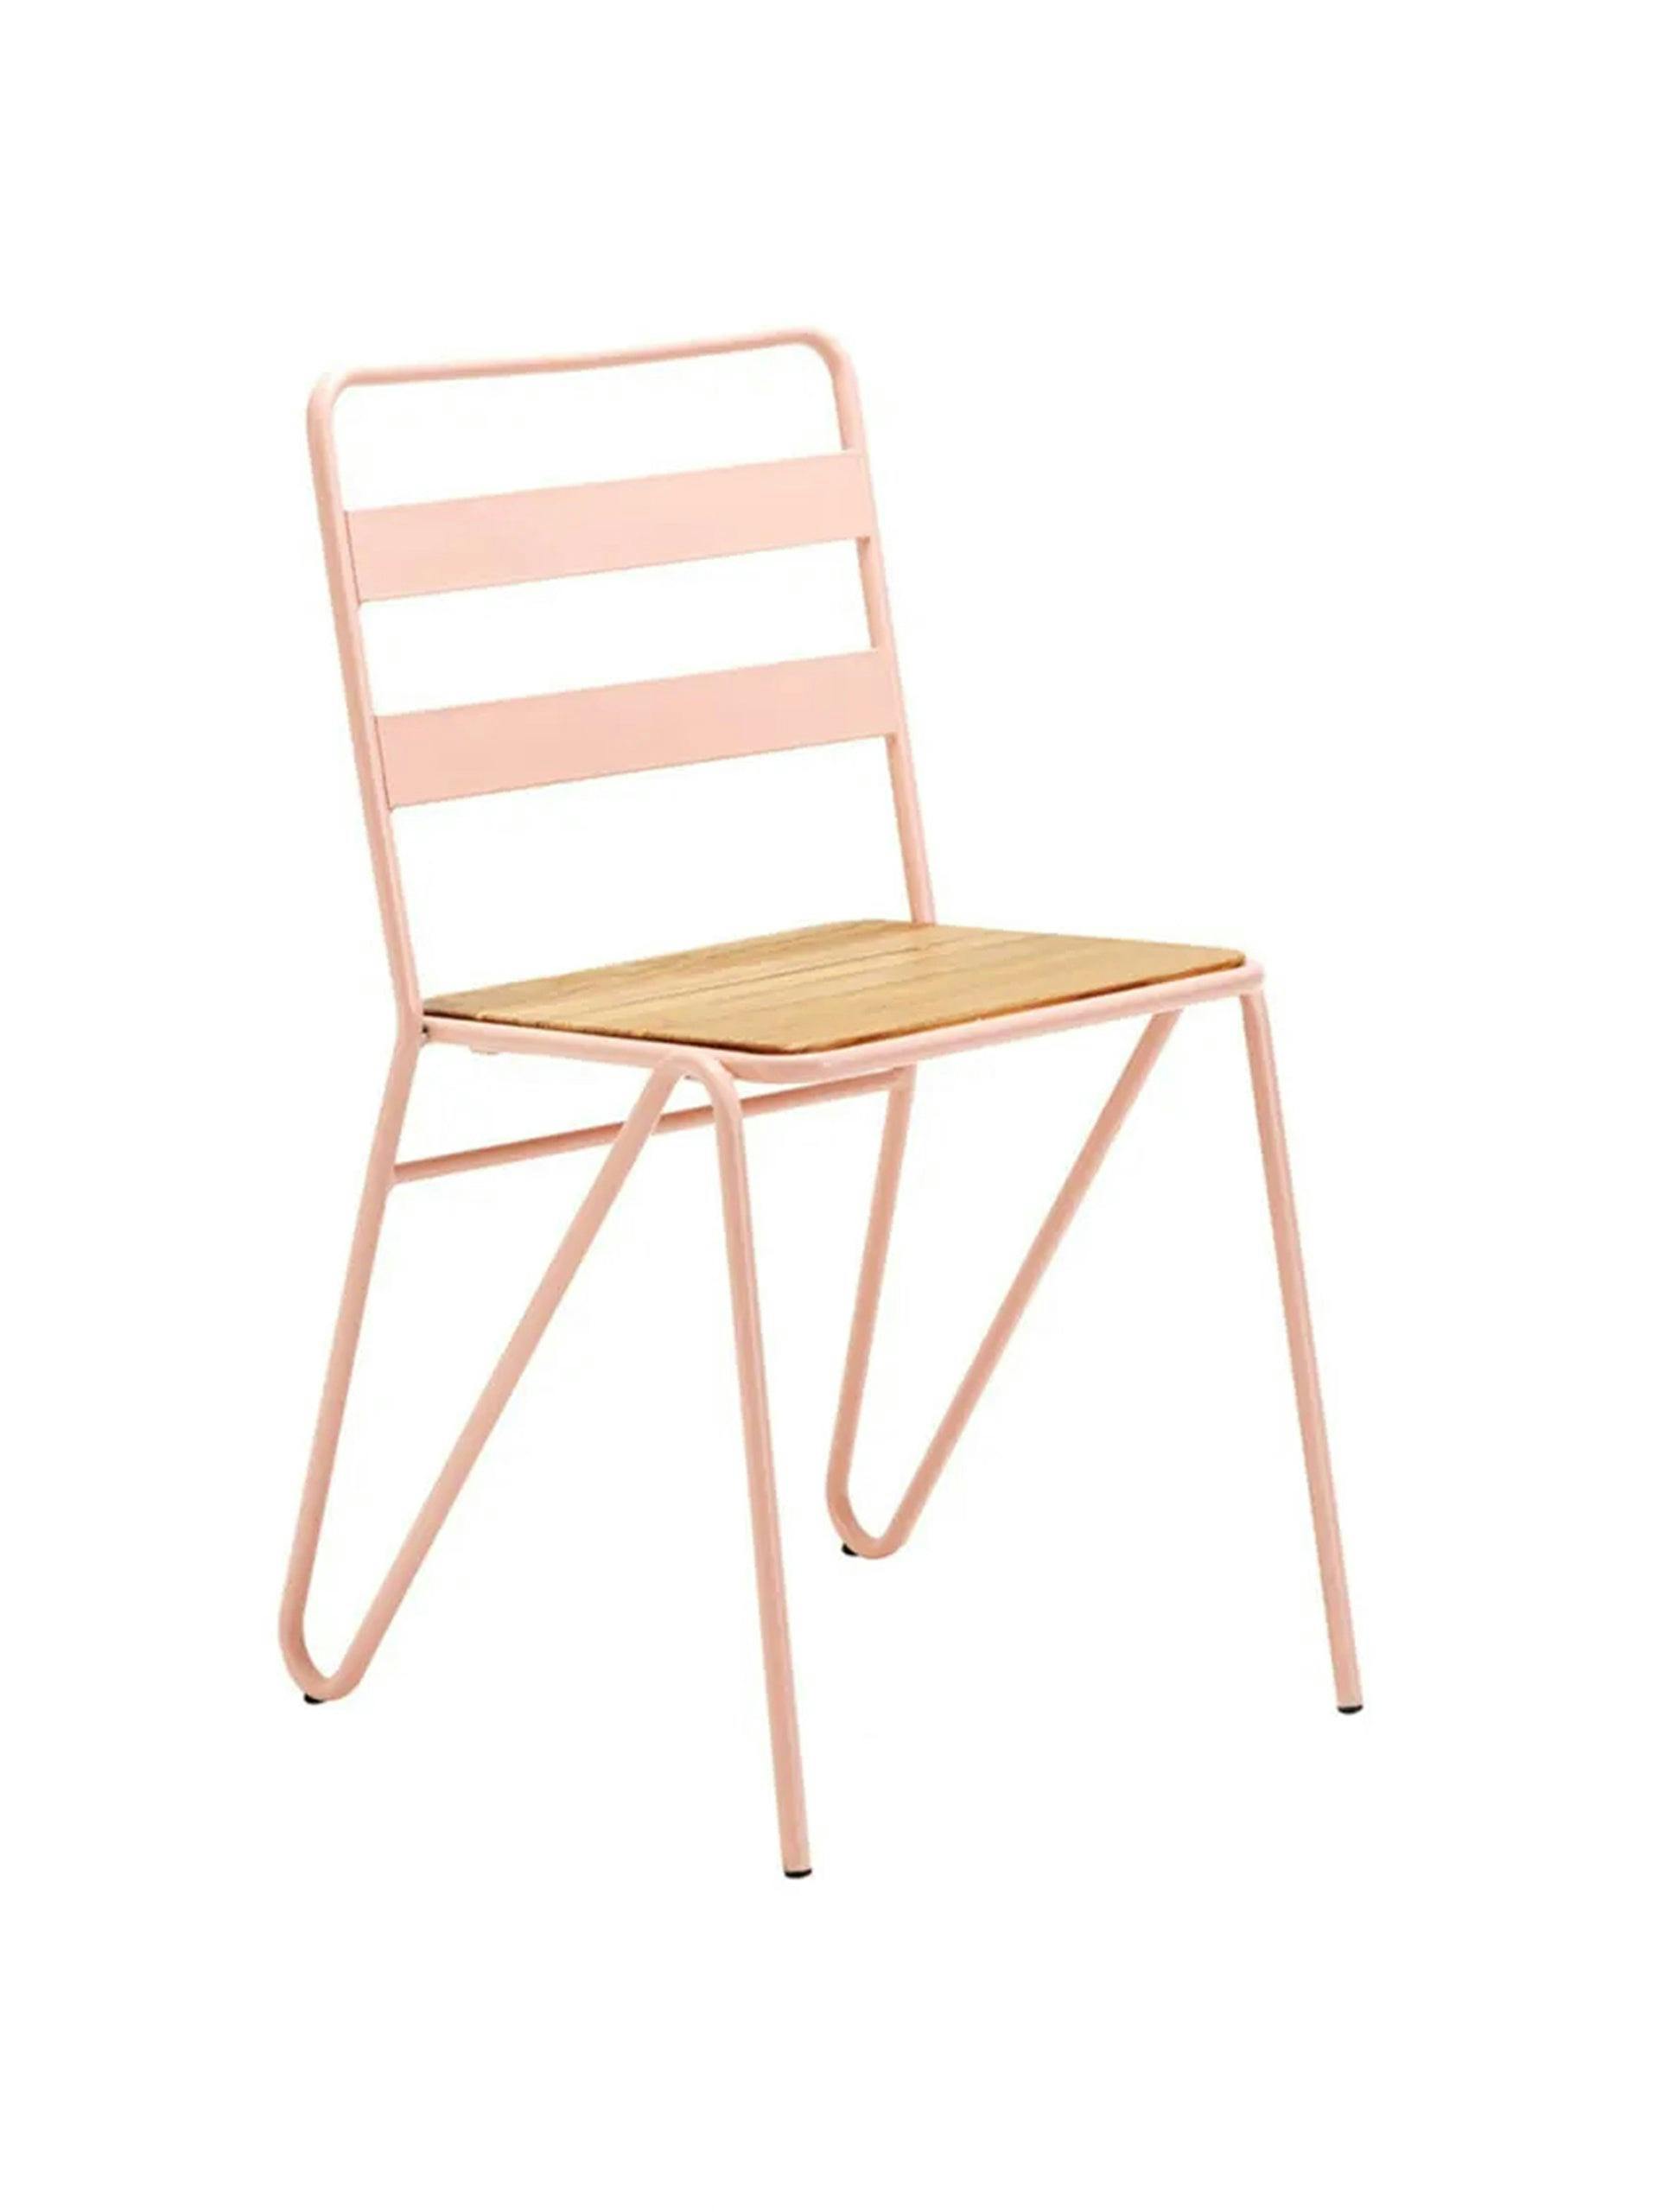 Pink metal chair